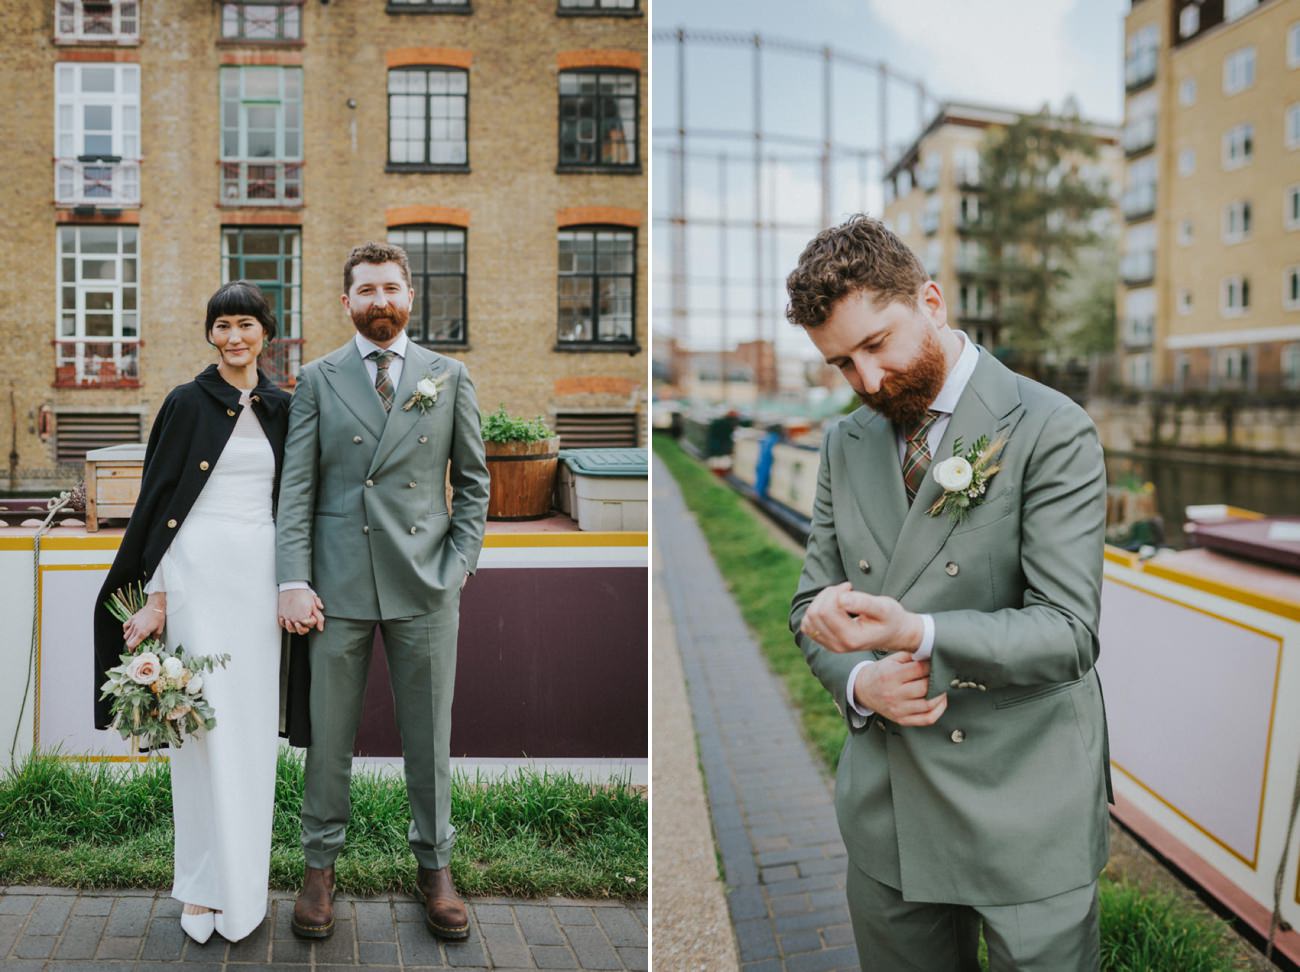 London Islington Town Hall and LARDO / Alternative Wedding Photographer / Hackney Canal Bride and Groom Portraits.